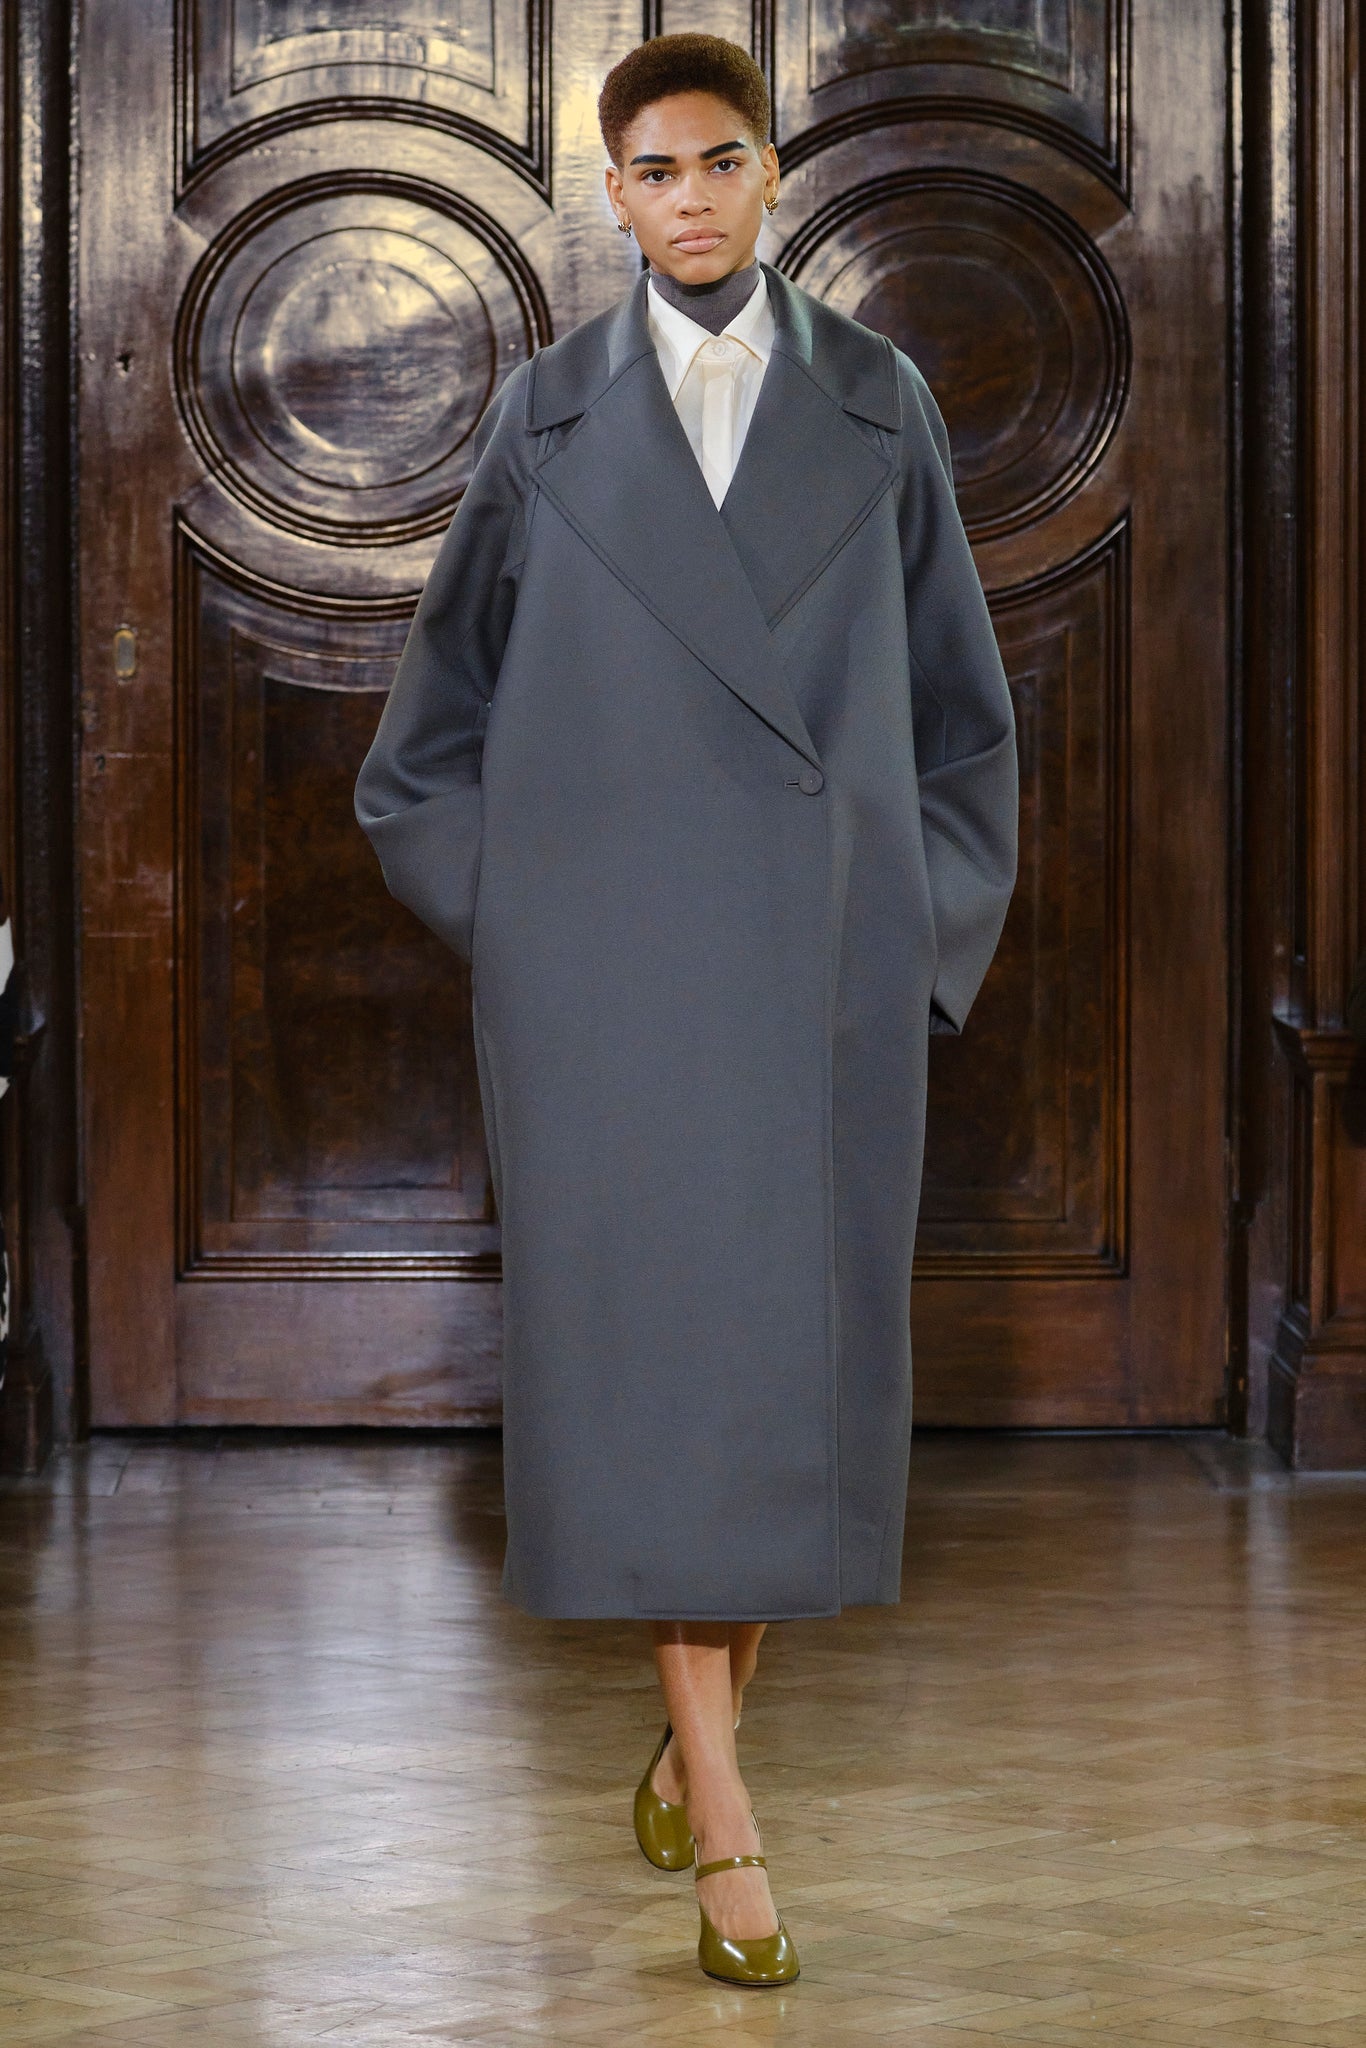 Lilabet Oversized Coat in Warm Grey Flanella | Emilia Wickstead